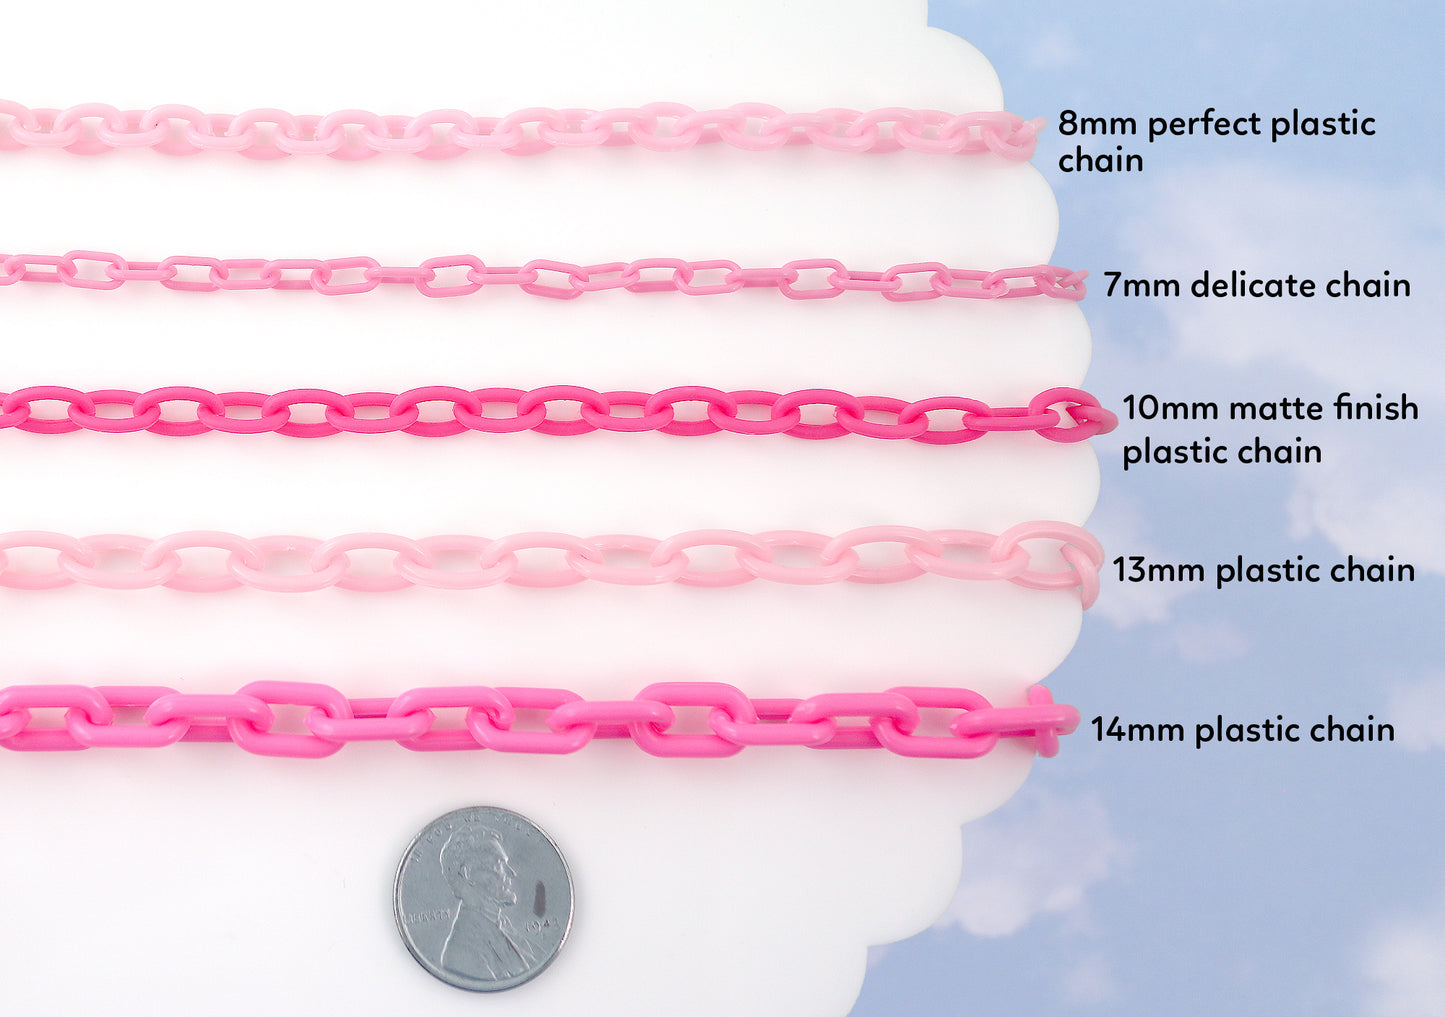 Plastic Chain - 14mm Bright Pink Acrylic or Plastic Chain - 15 inch length / 38 cm length - 3 pcs set